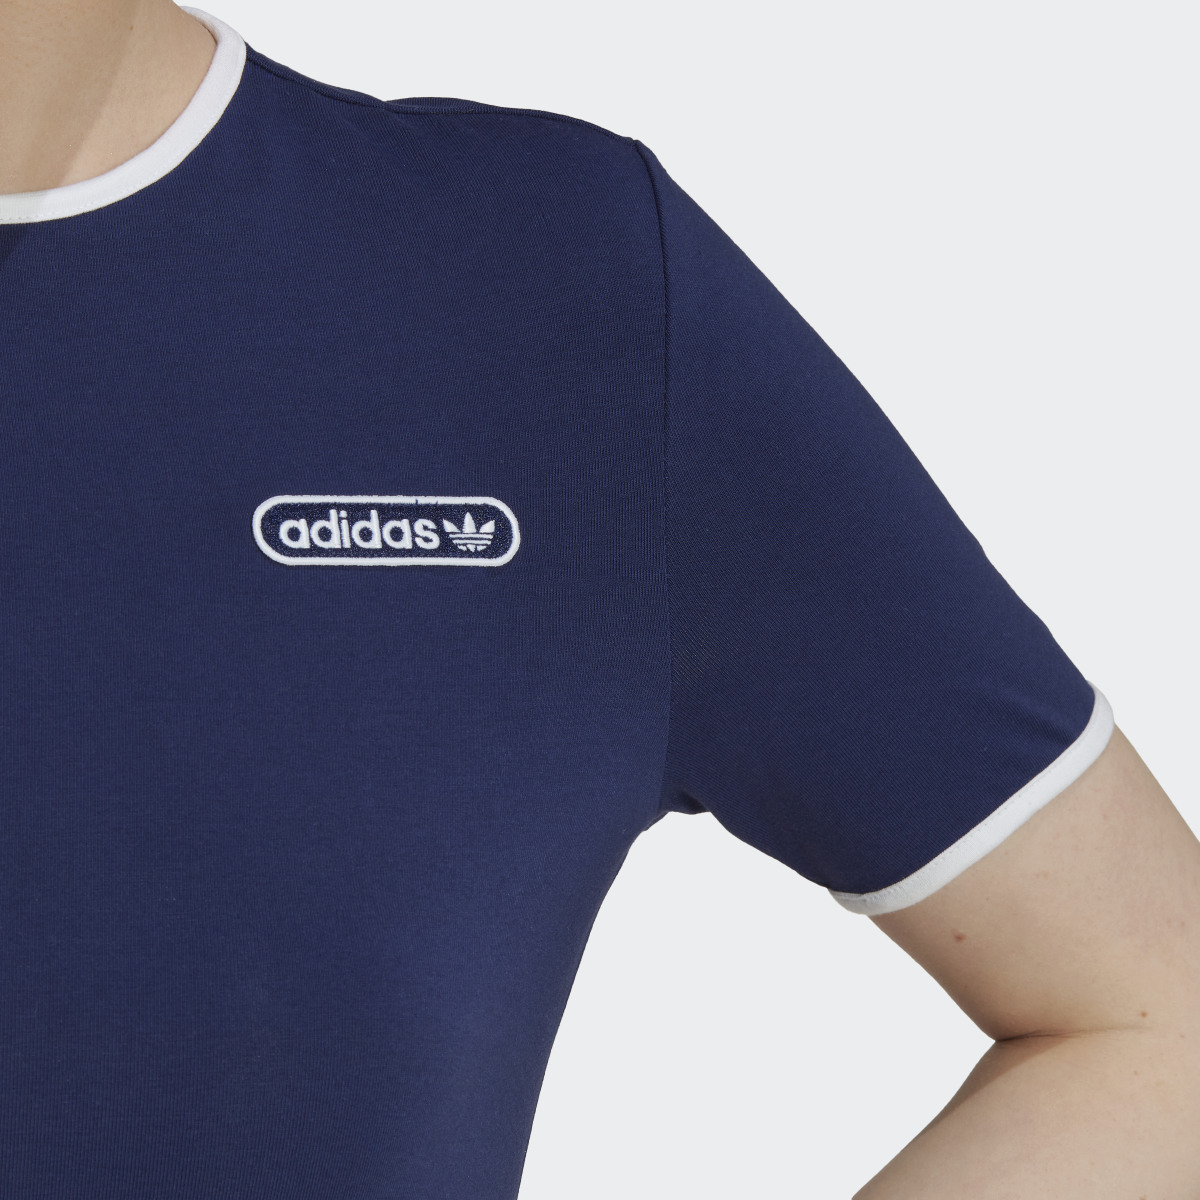 Adidas T-shirt Crop with Binding Details. 6